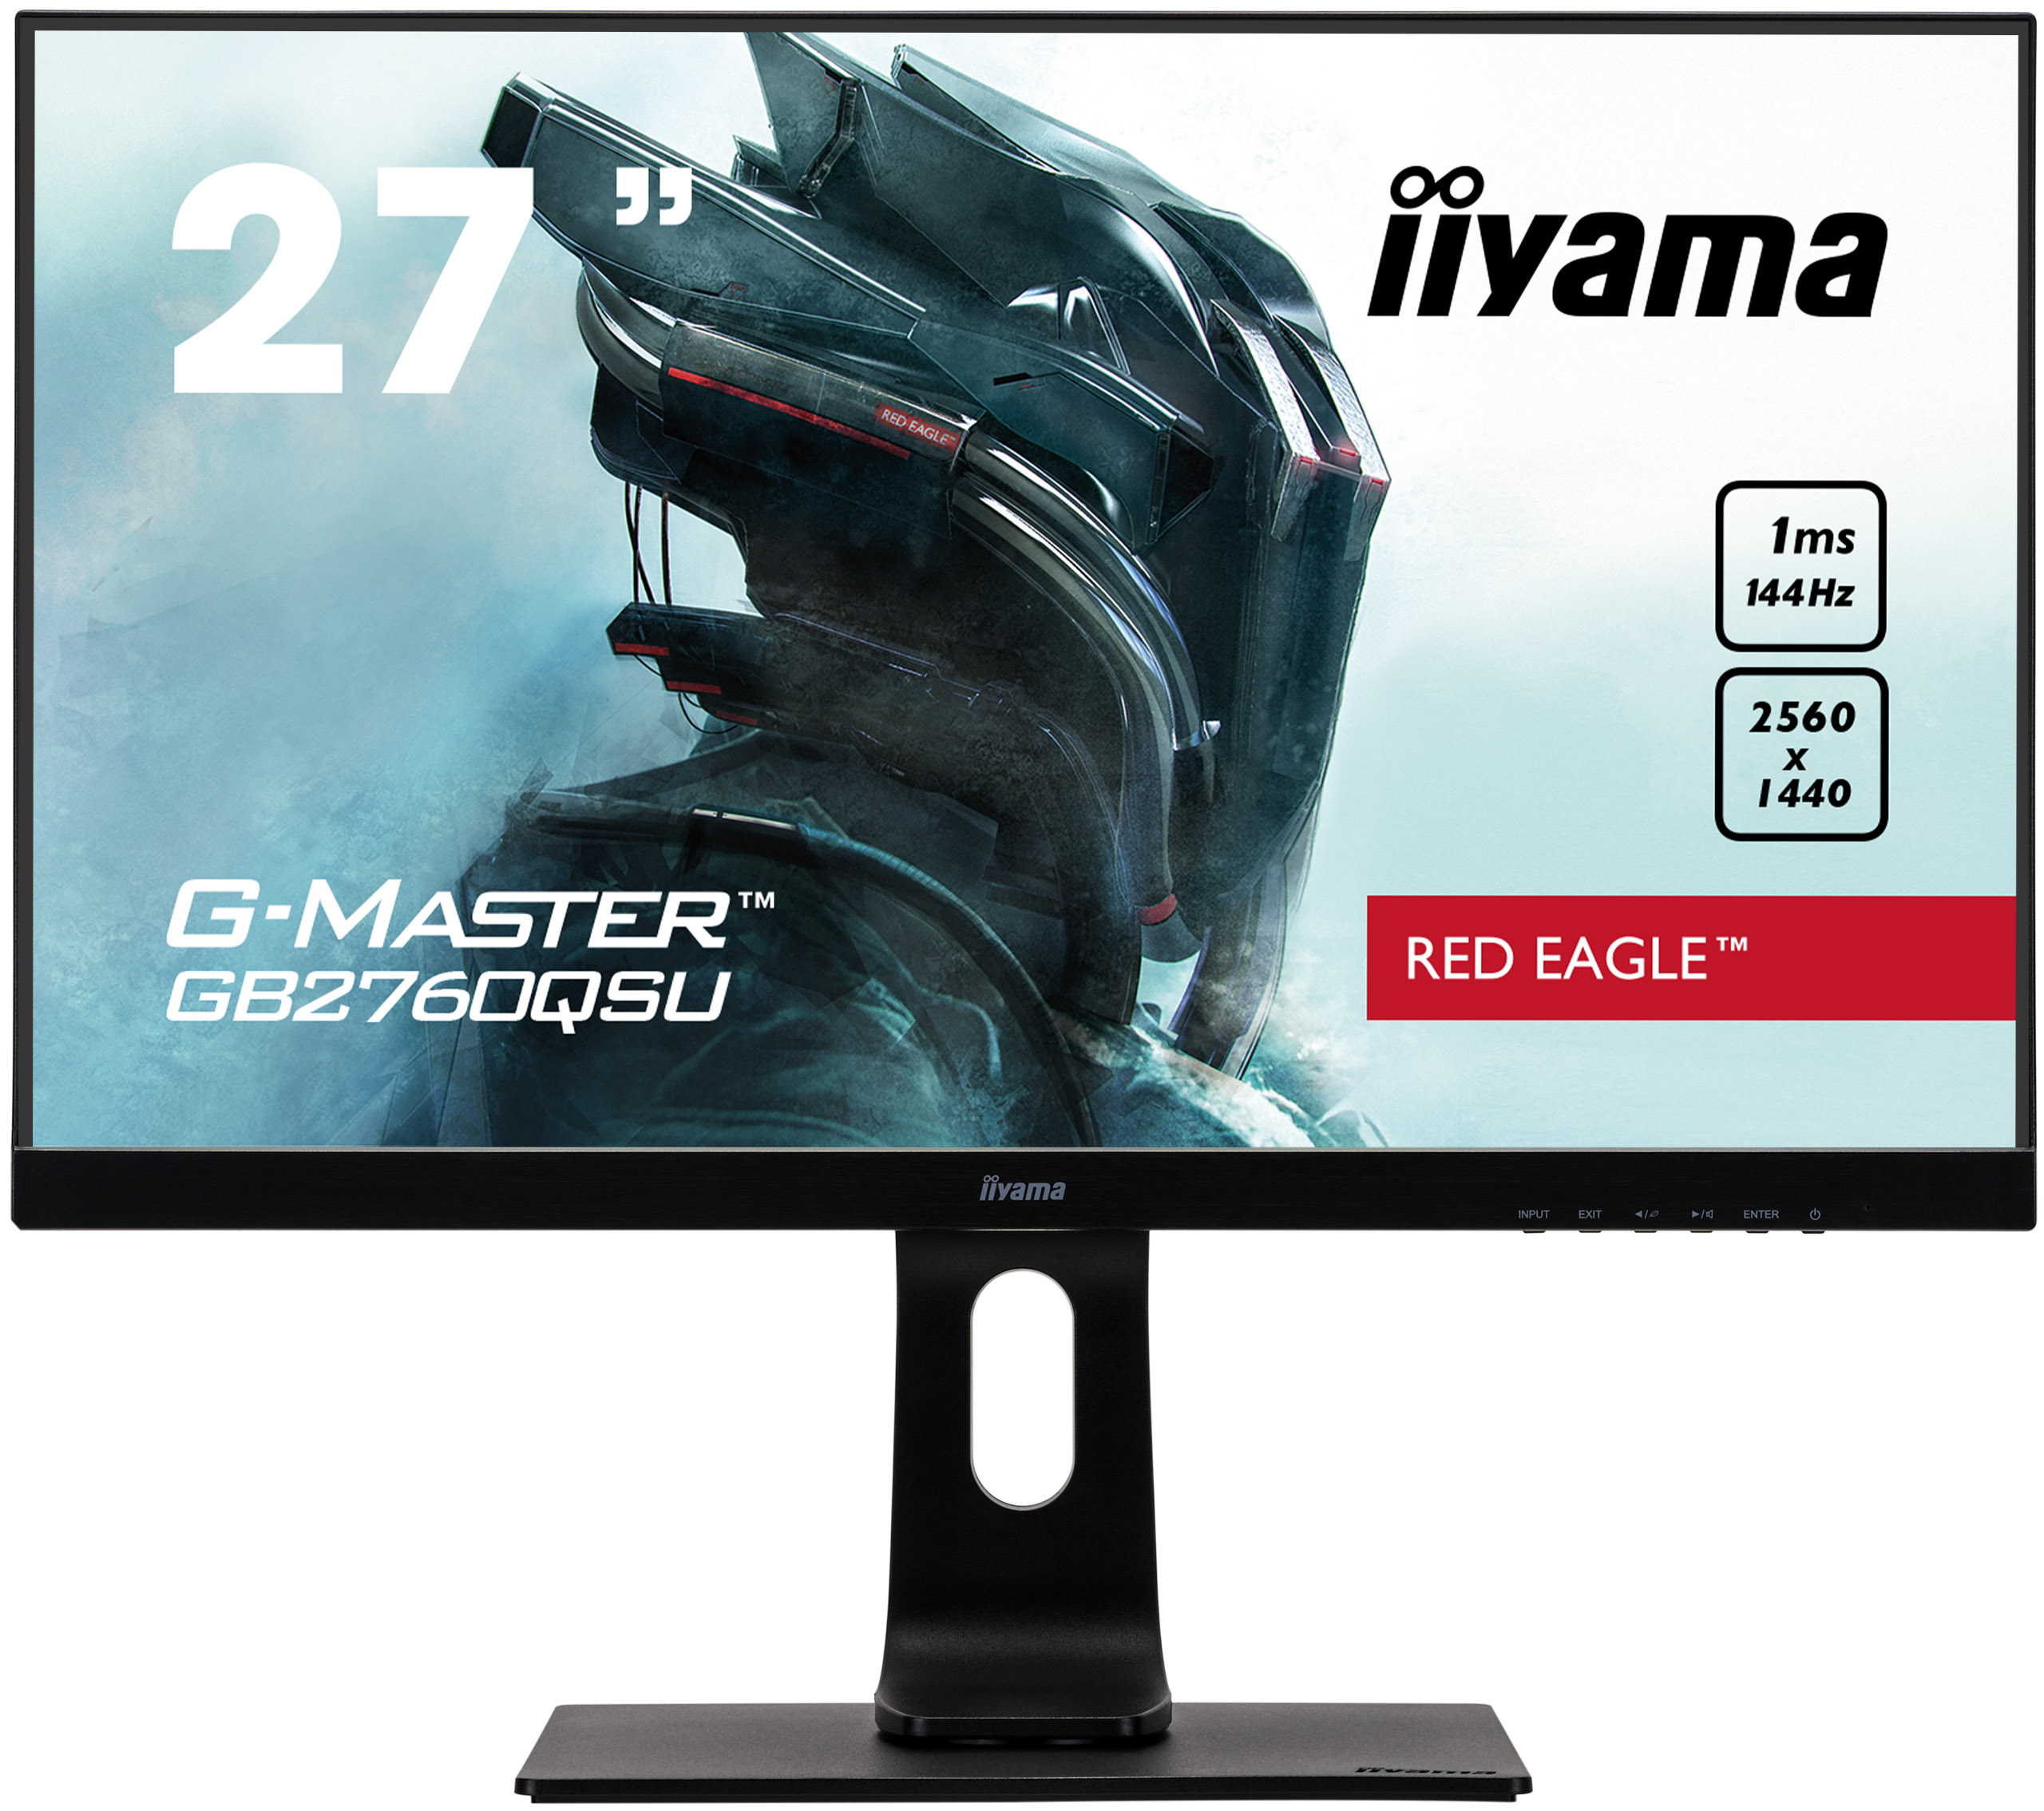 Iiyama G-MASTER GB2760QSU-B1 RED EAGLE | 27" | 144Hz | WQHD | Gaming Monitor